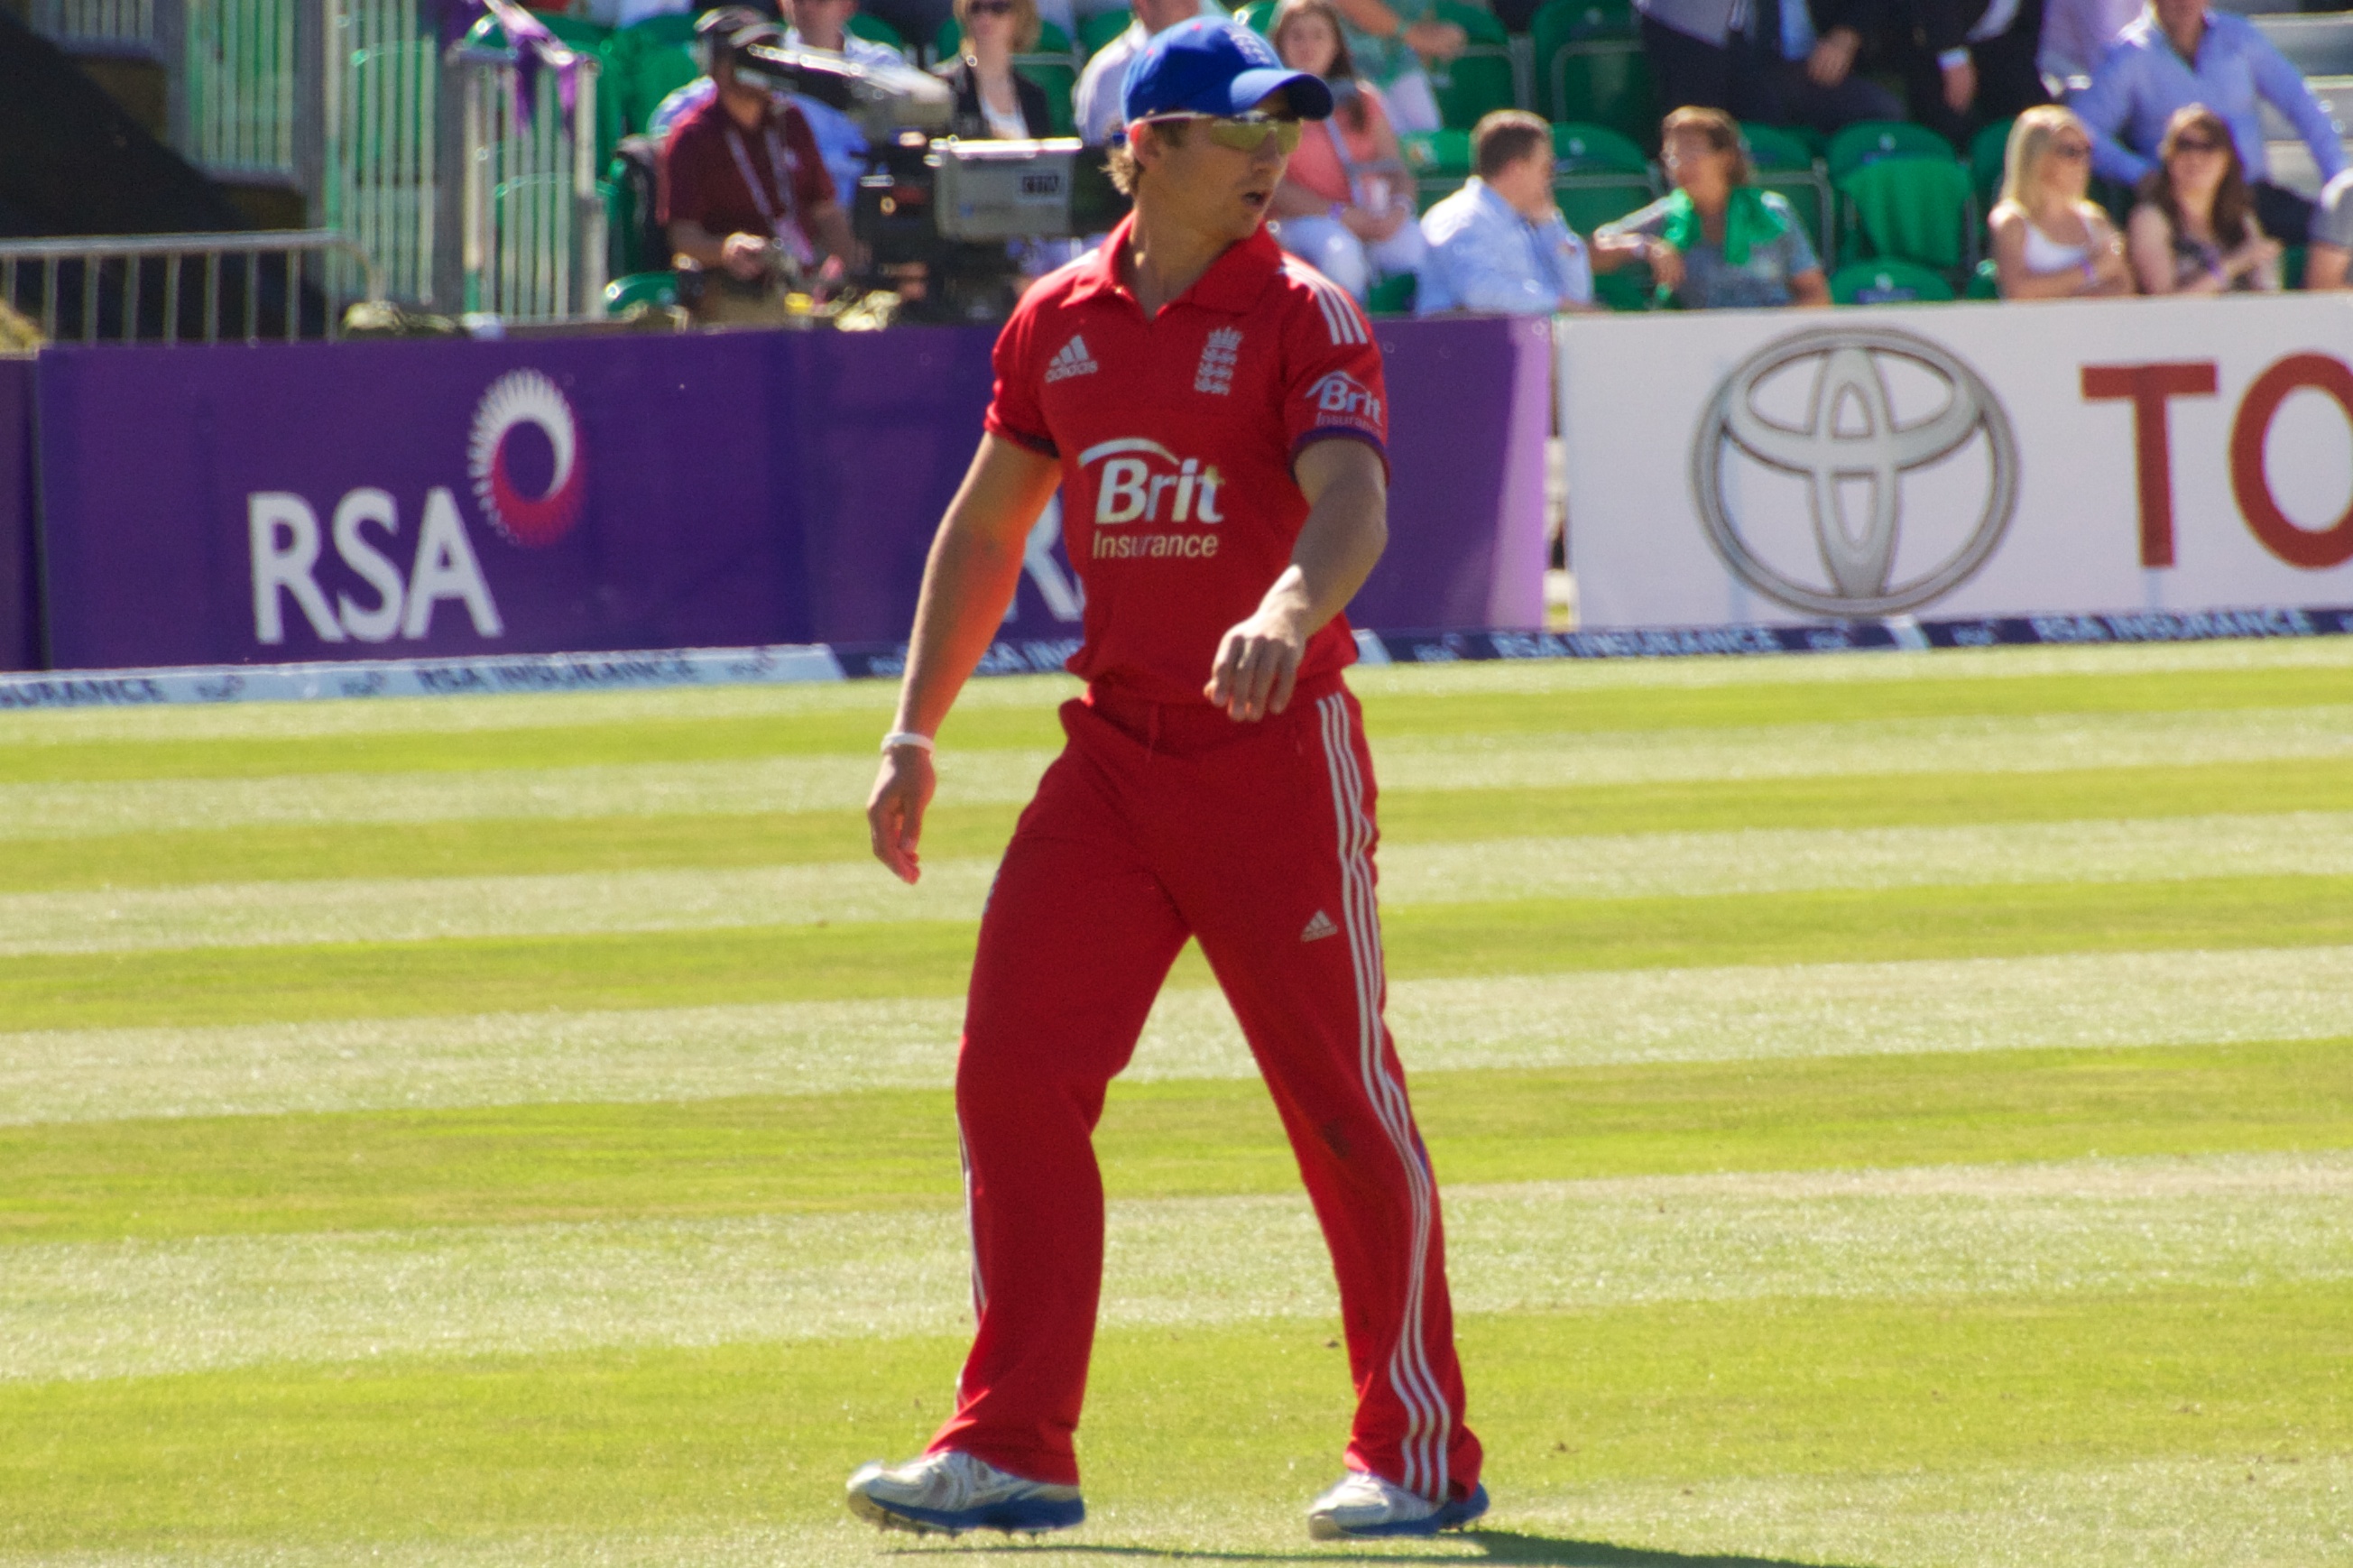 English batsman James Taylor ends career over serious heart condition